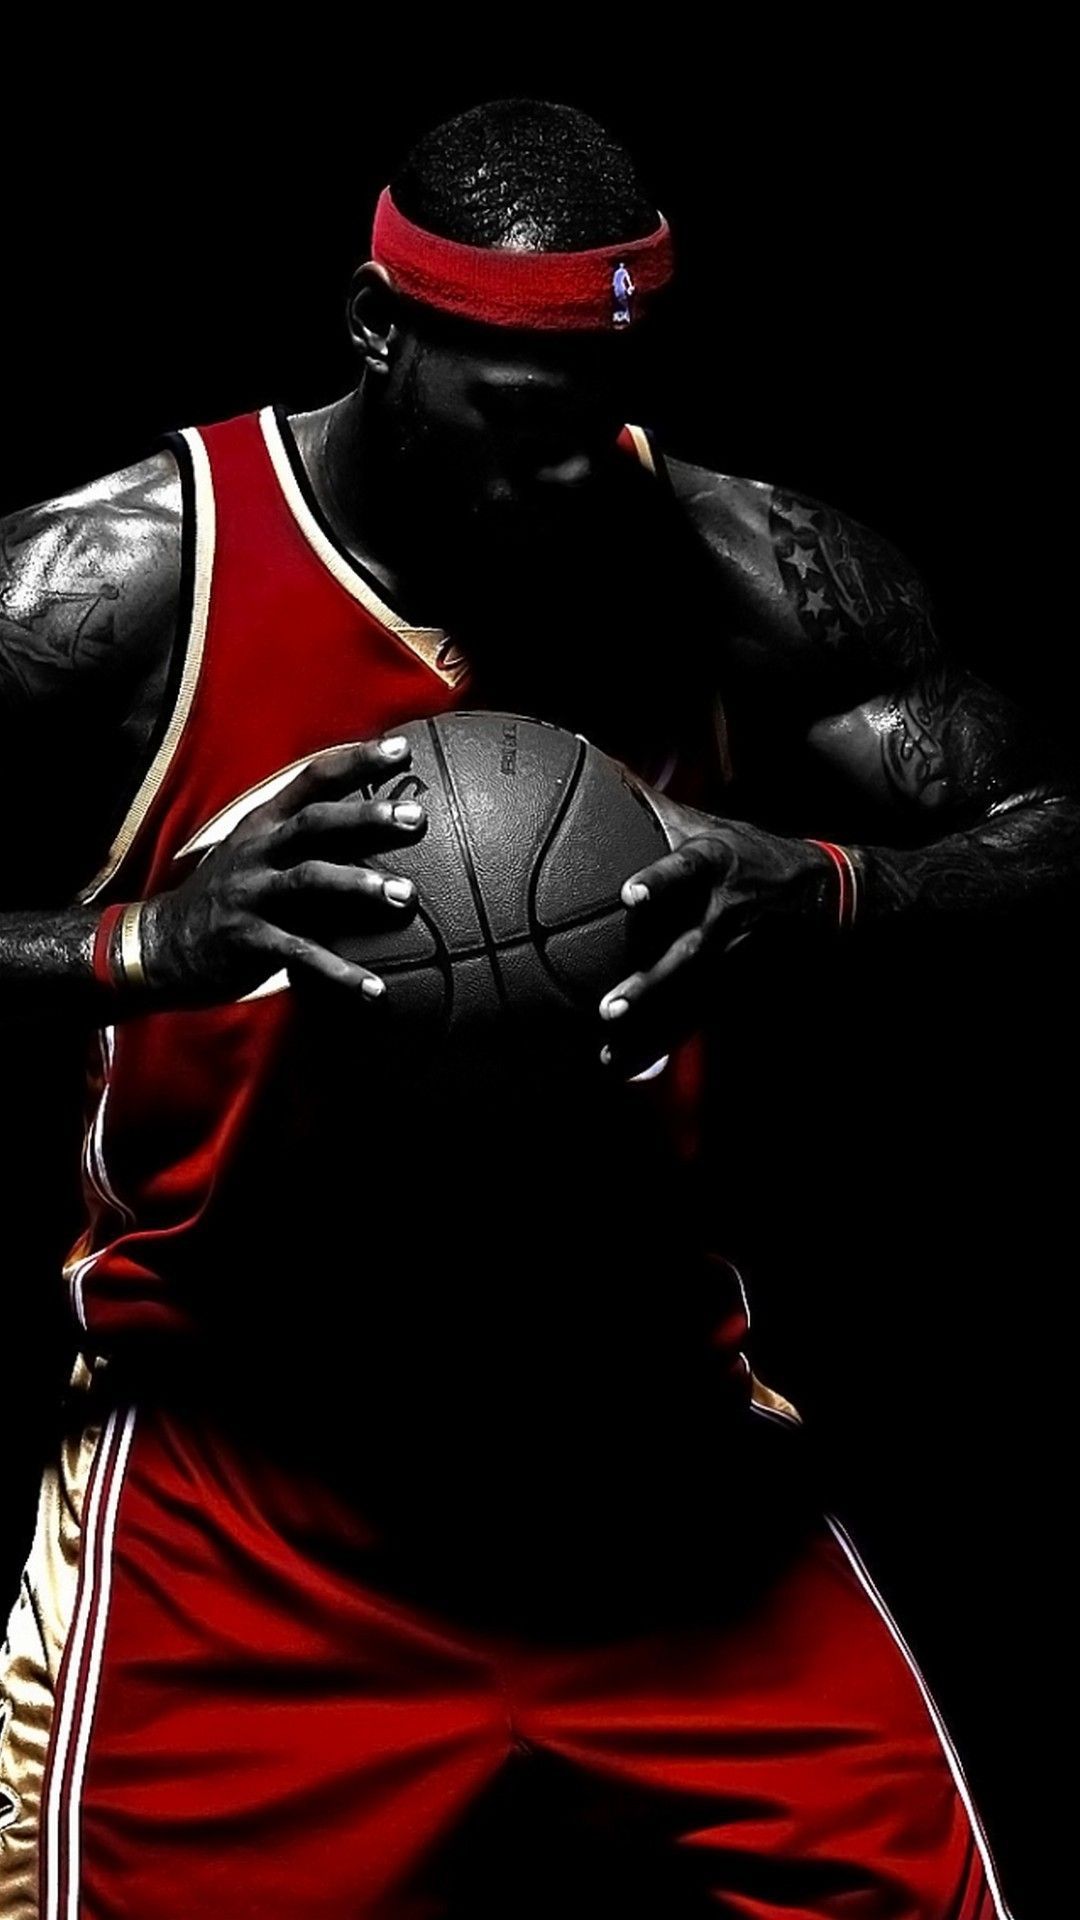 Mobile Wallpaper HD NBA Basketball Wallpaper. Lebron james wallpaper, Nba wallpaper, Lebron james